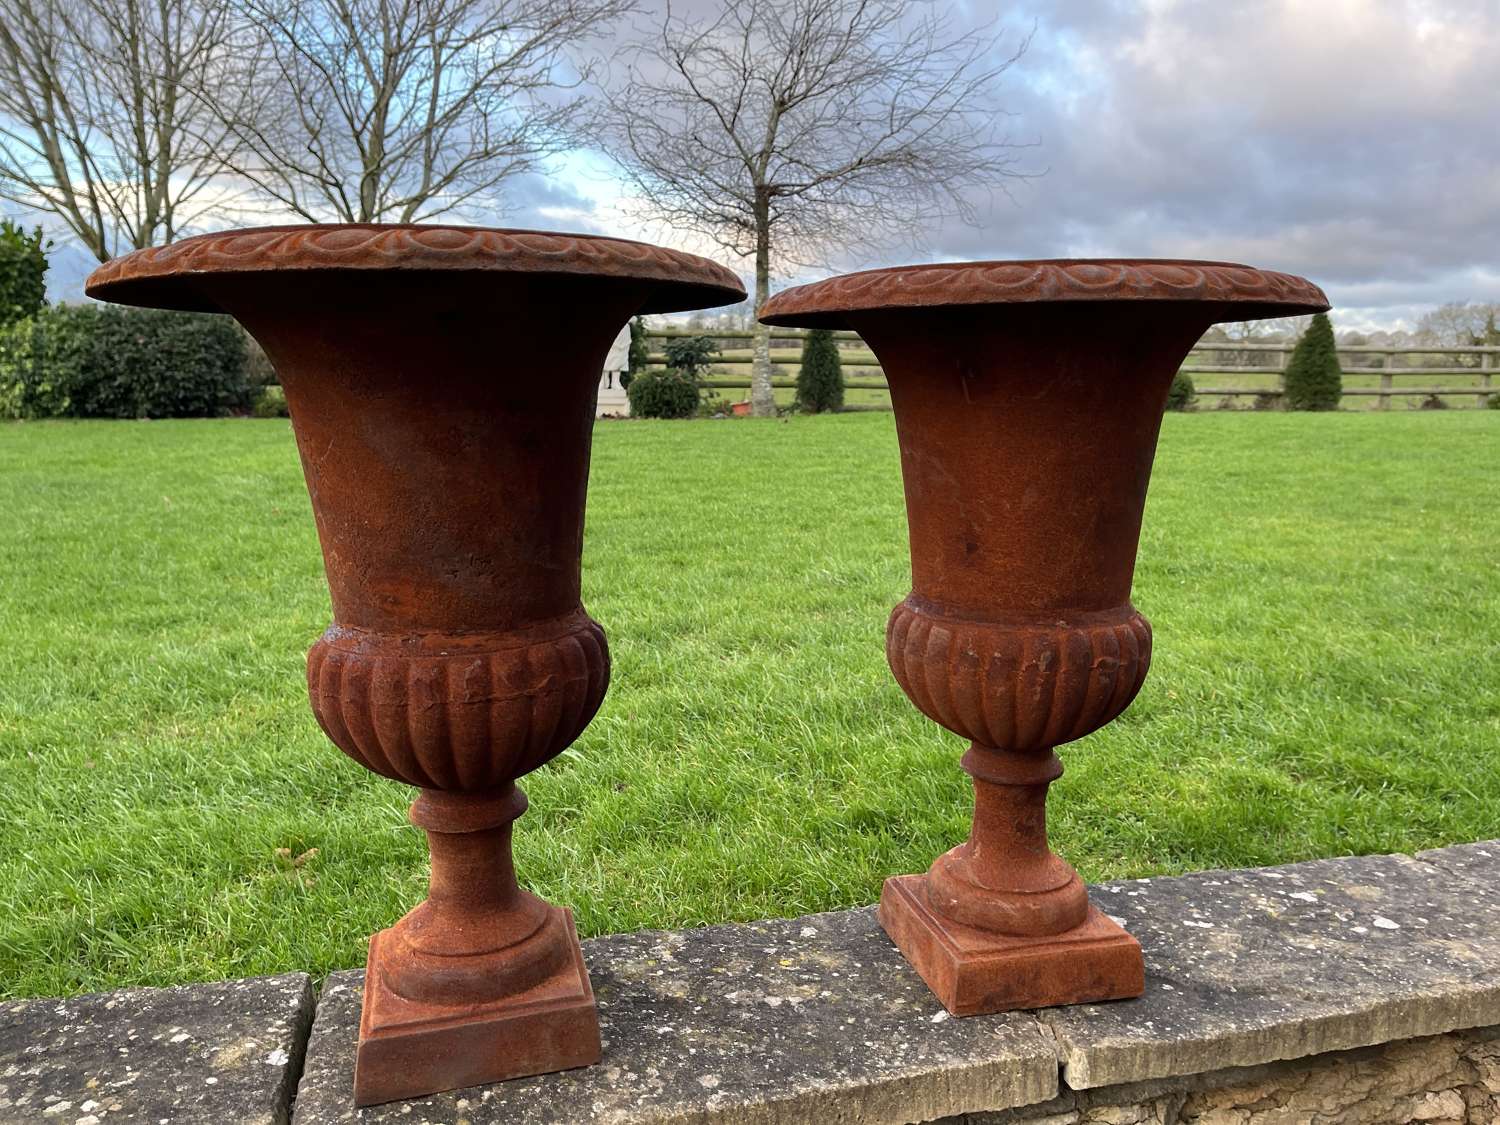 Pair of rusty cast iron urns - cast iron planters